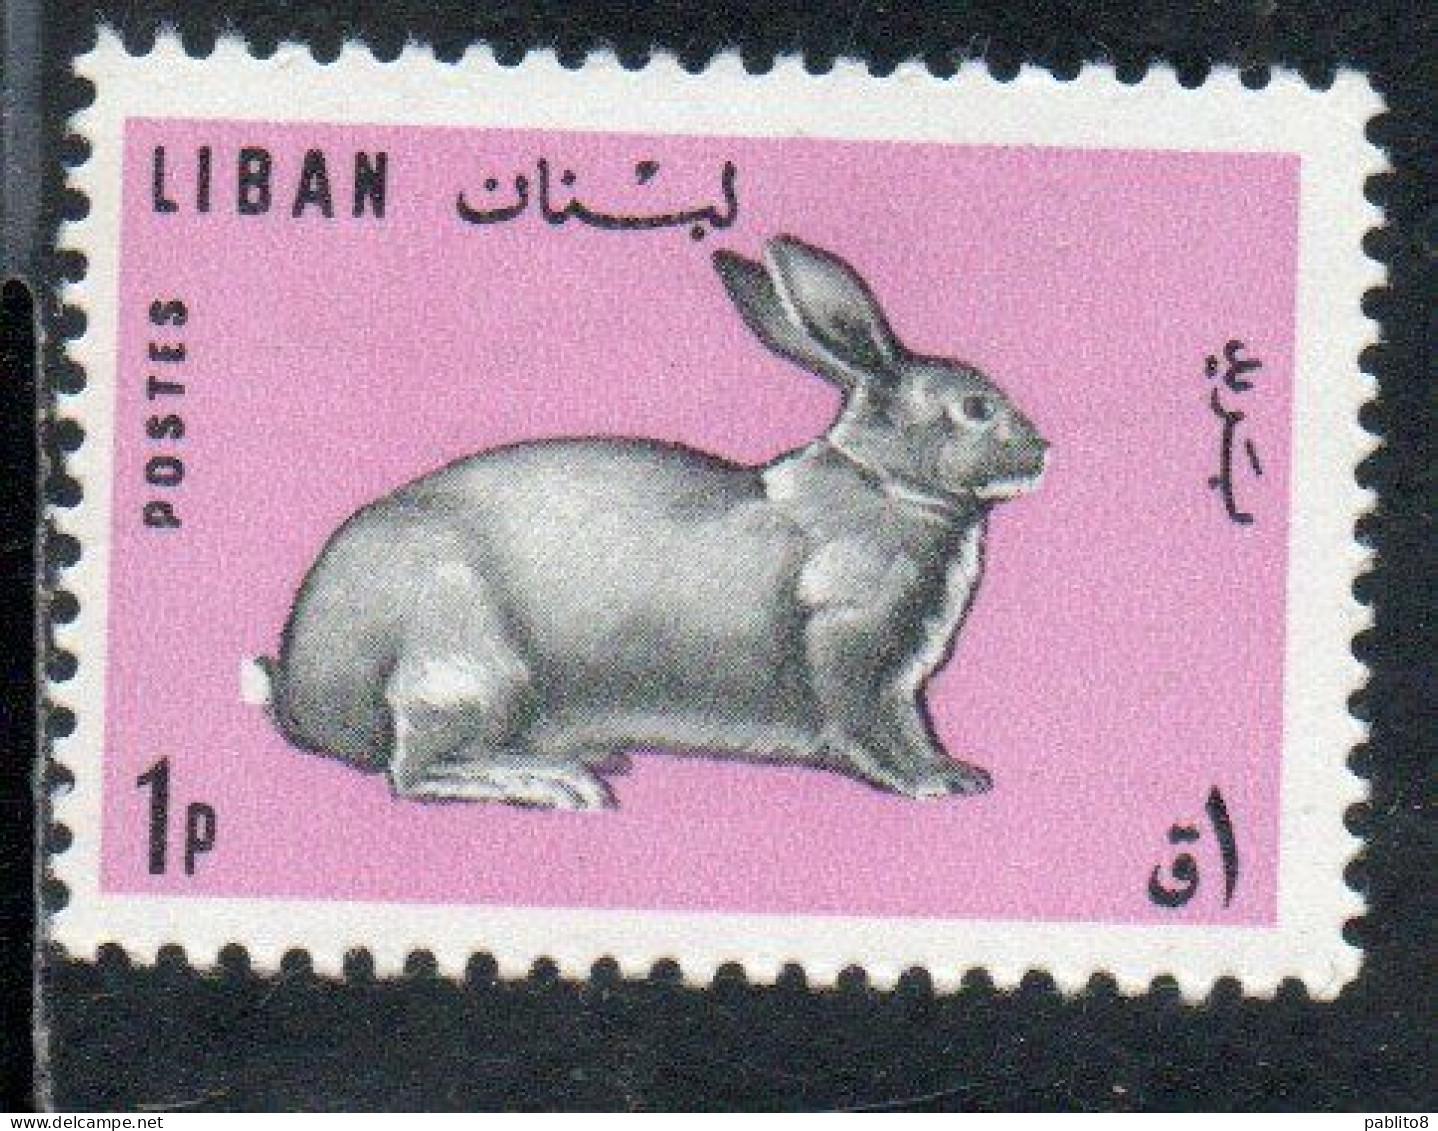 LIBANO LEBANON LIBAN 1965 FAUNA FARM ANIMALS RABBIT 1p MNH - Liban